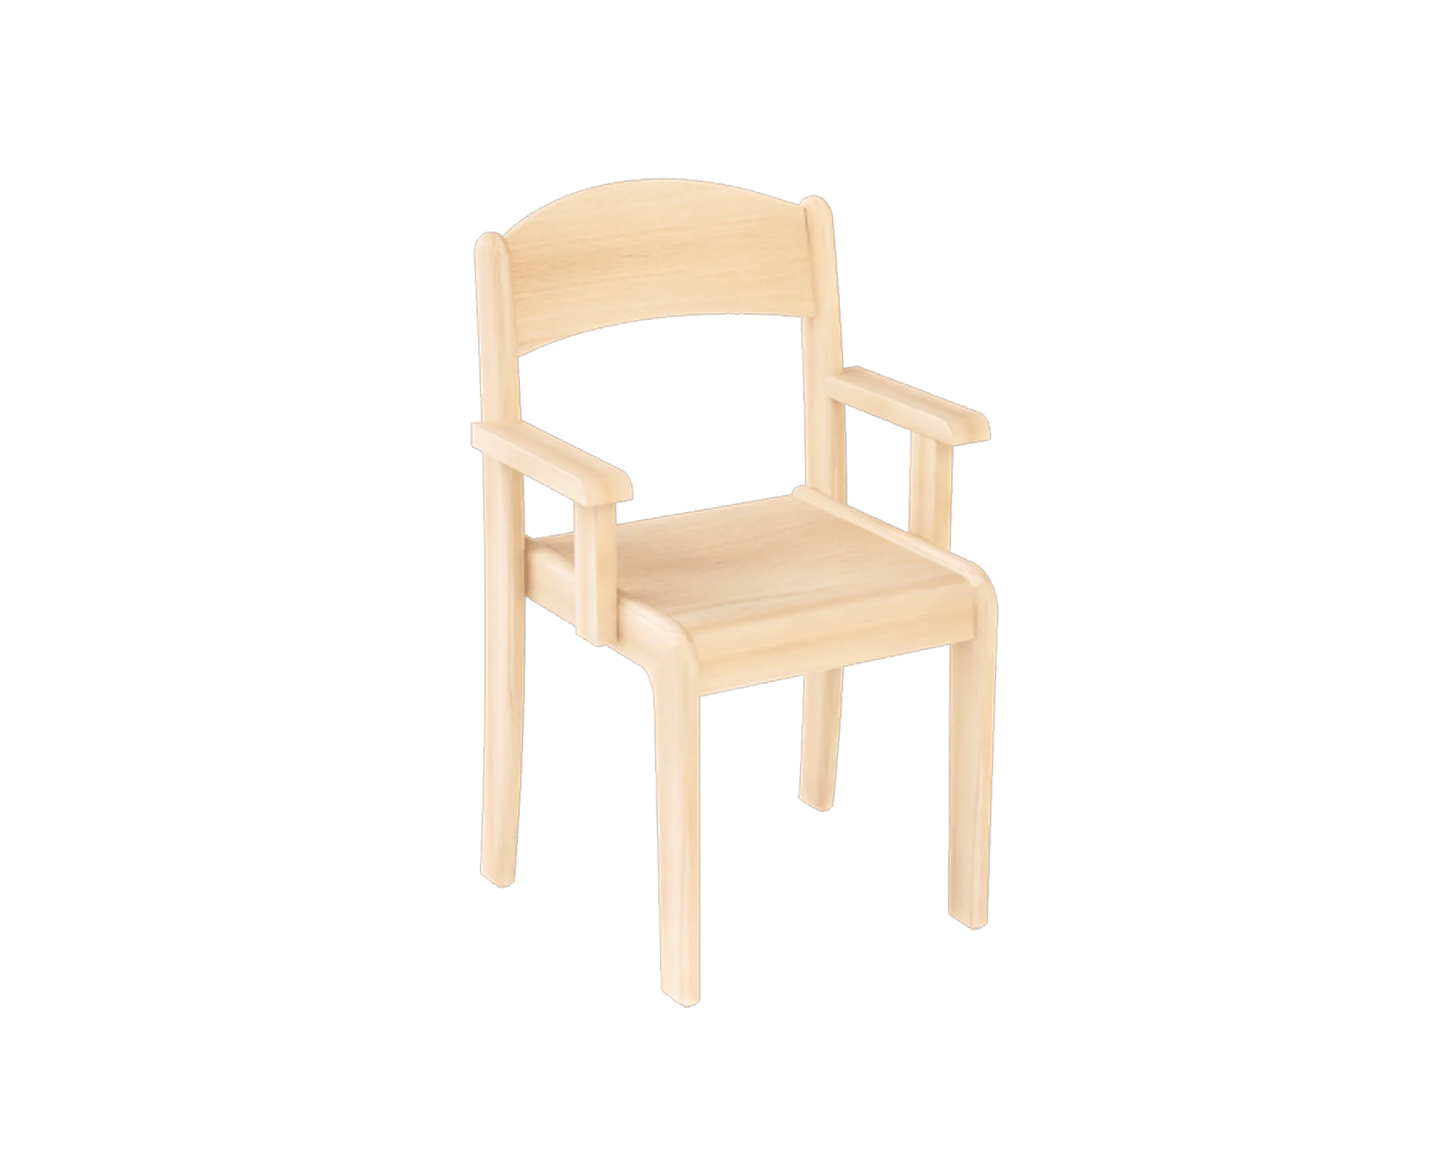 Deluxe Arm chair C0 / 21 x 22.5 - H. 21 cm